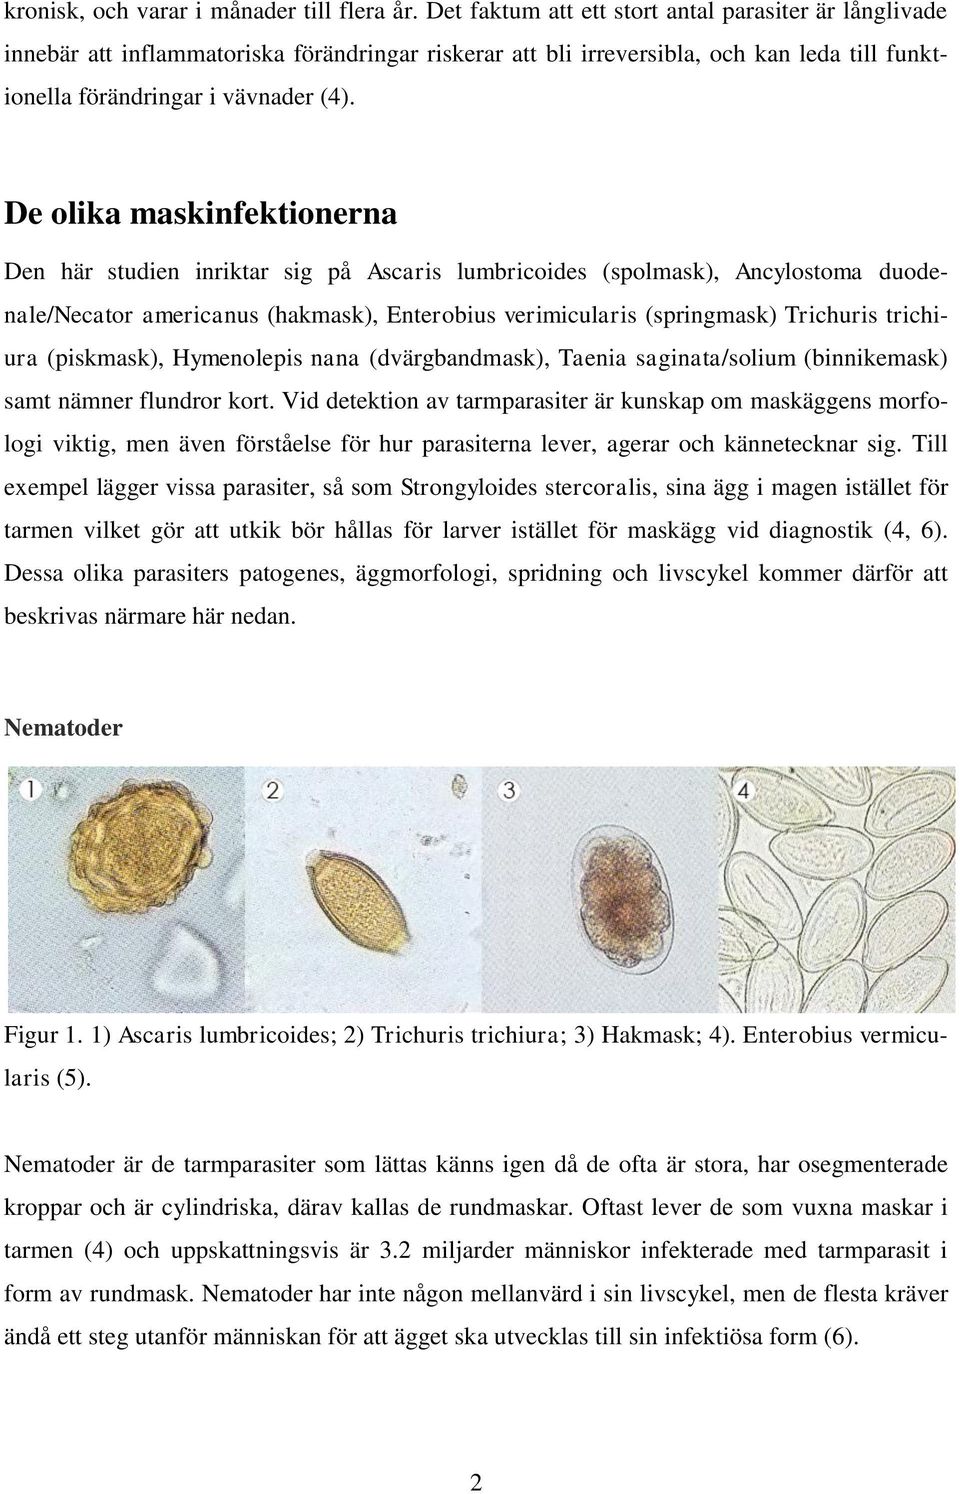 De olika maskinfektionerna Den här studien inriktar sig på Ascaris lumbricoides (spolmask), Ancylostoma duodenale/necator americanus (hakmask), Enterobius verimicularis (springmask) Trichuris